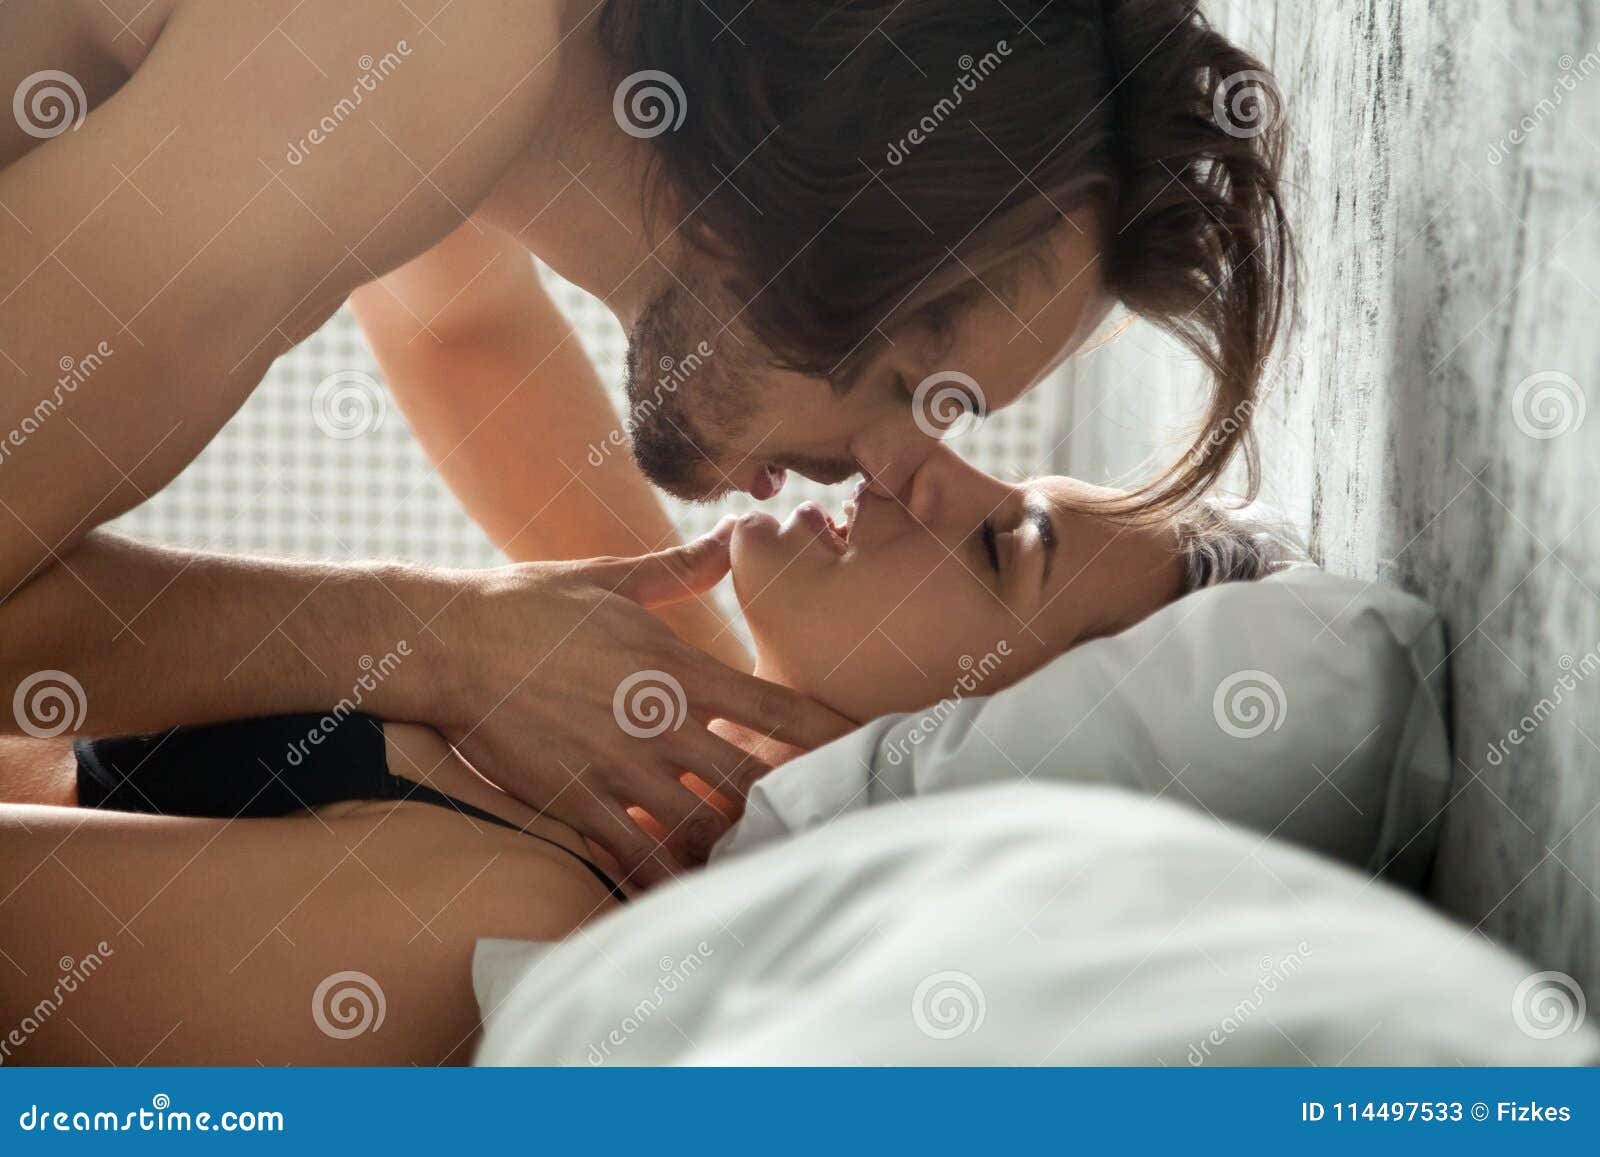 chelsea malina add photo hot kissing and touching